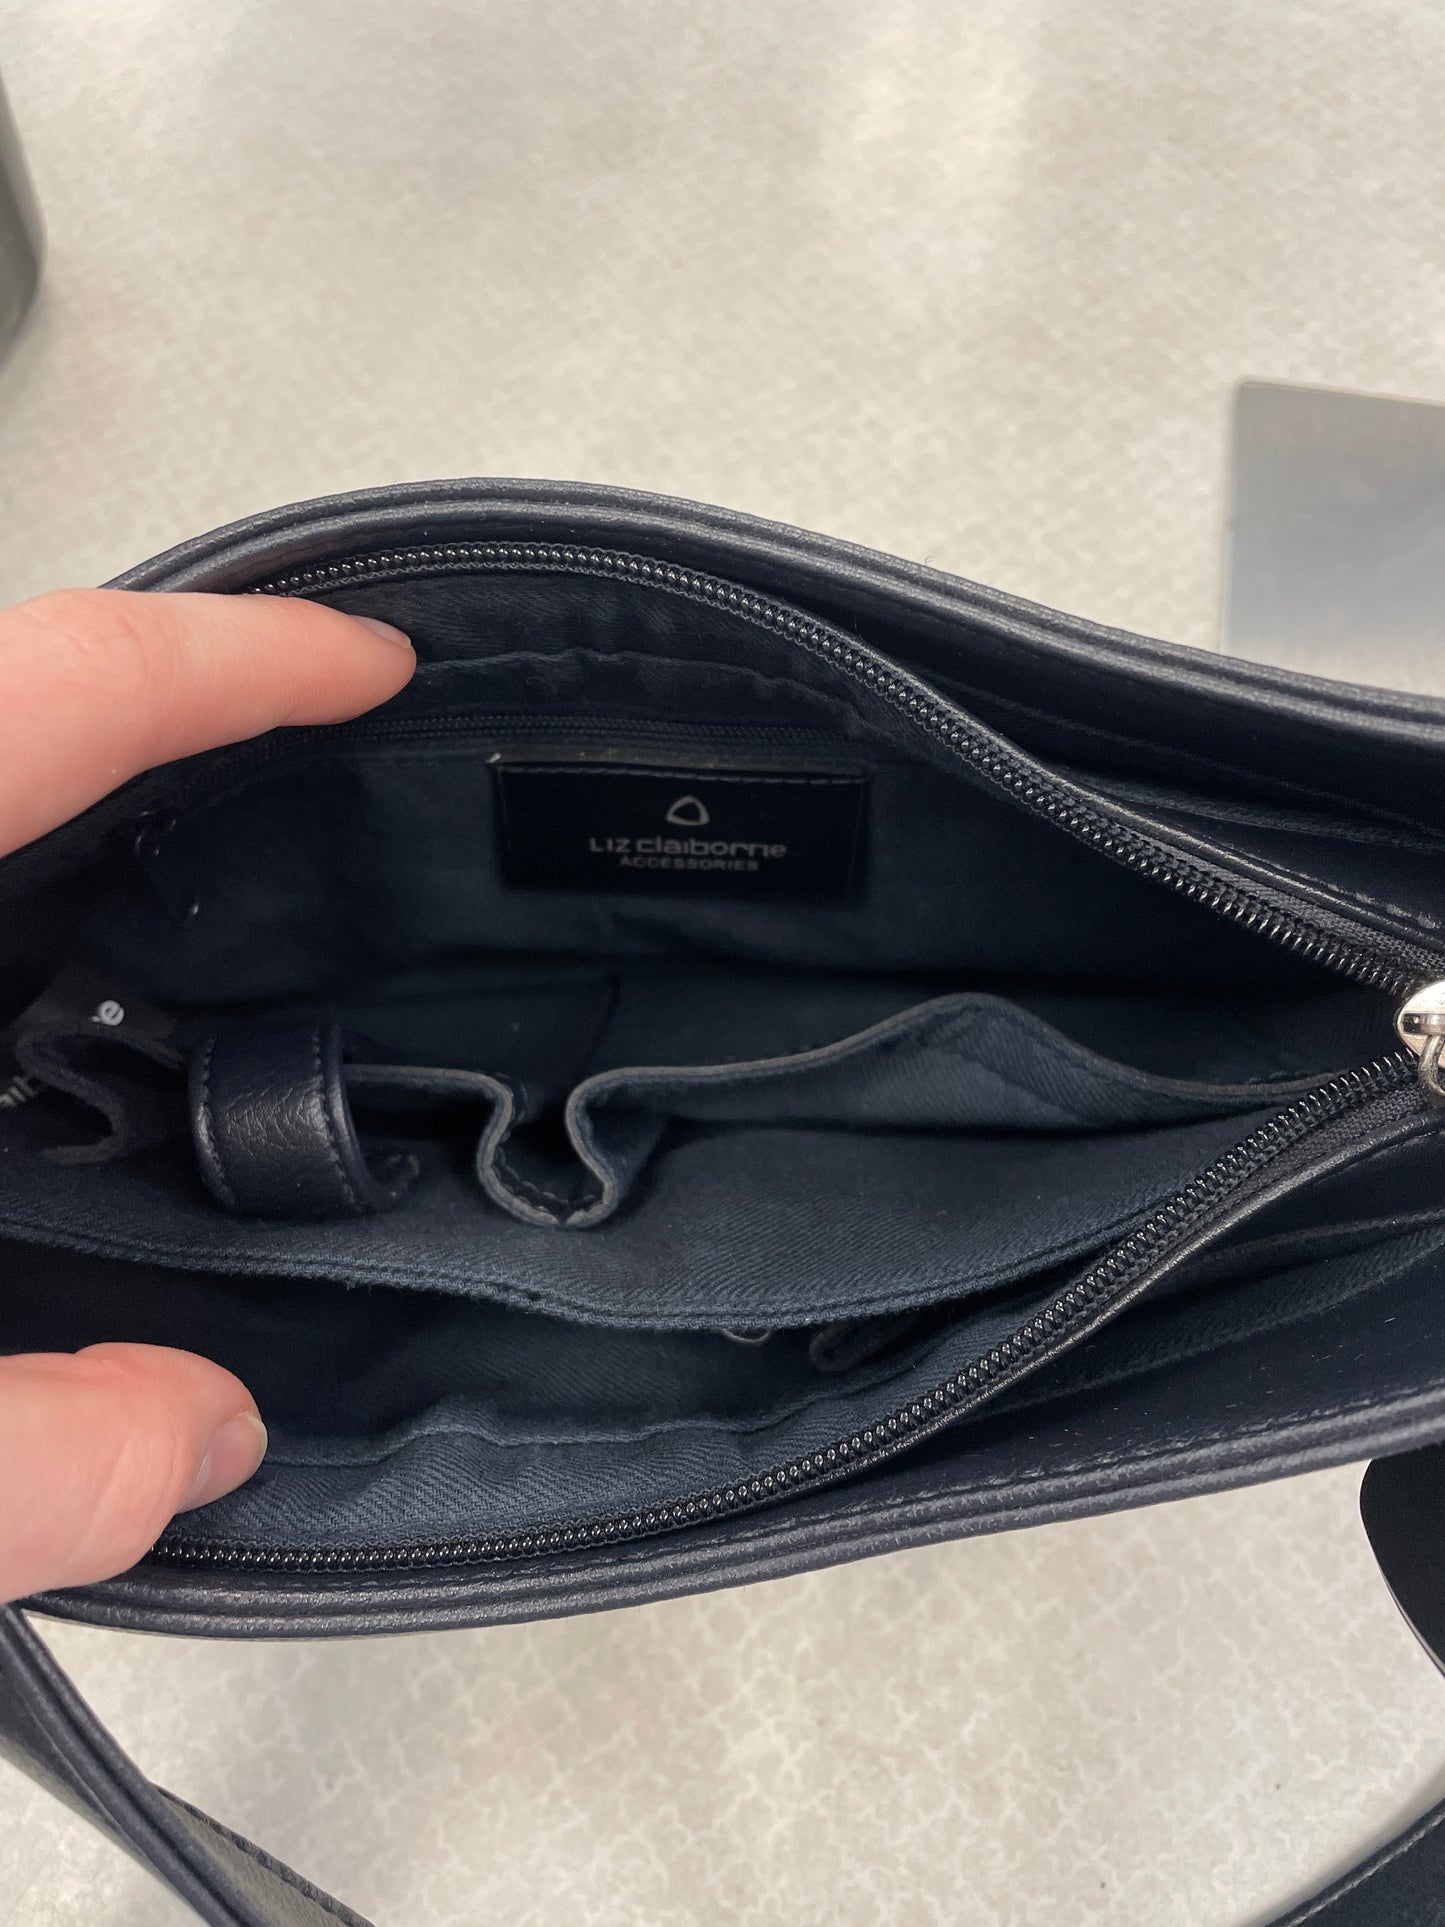 Handbag By Liz Claiborne  Size: Medium